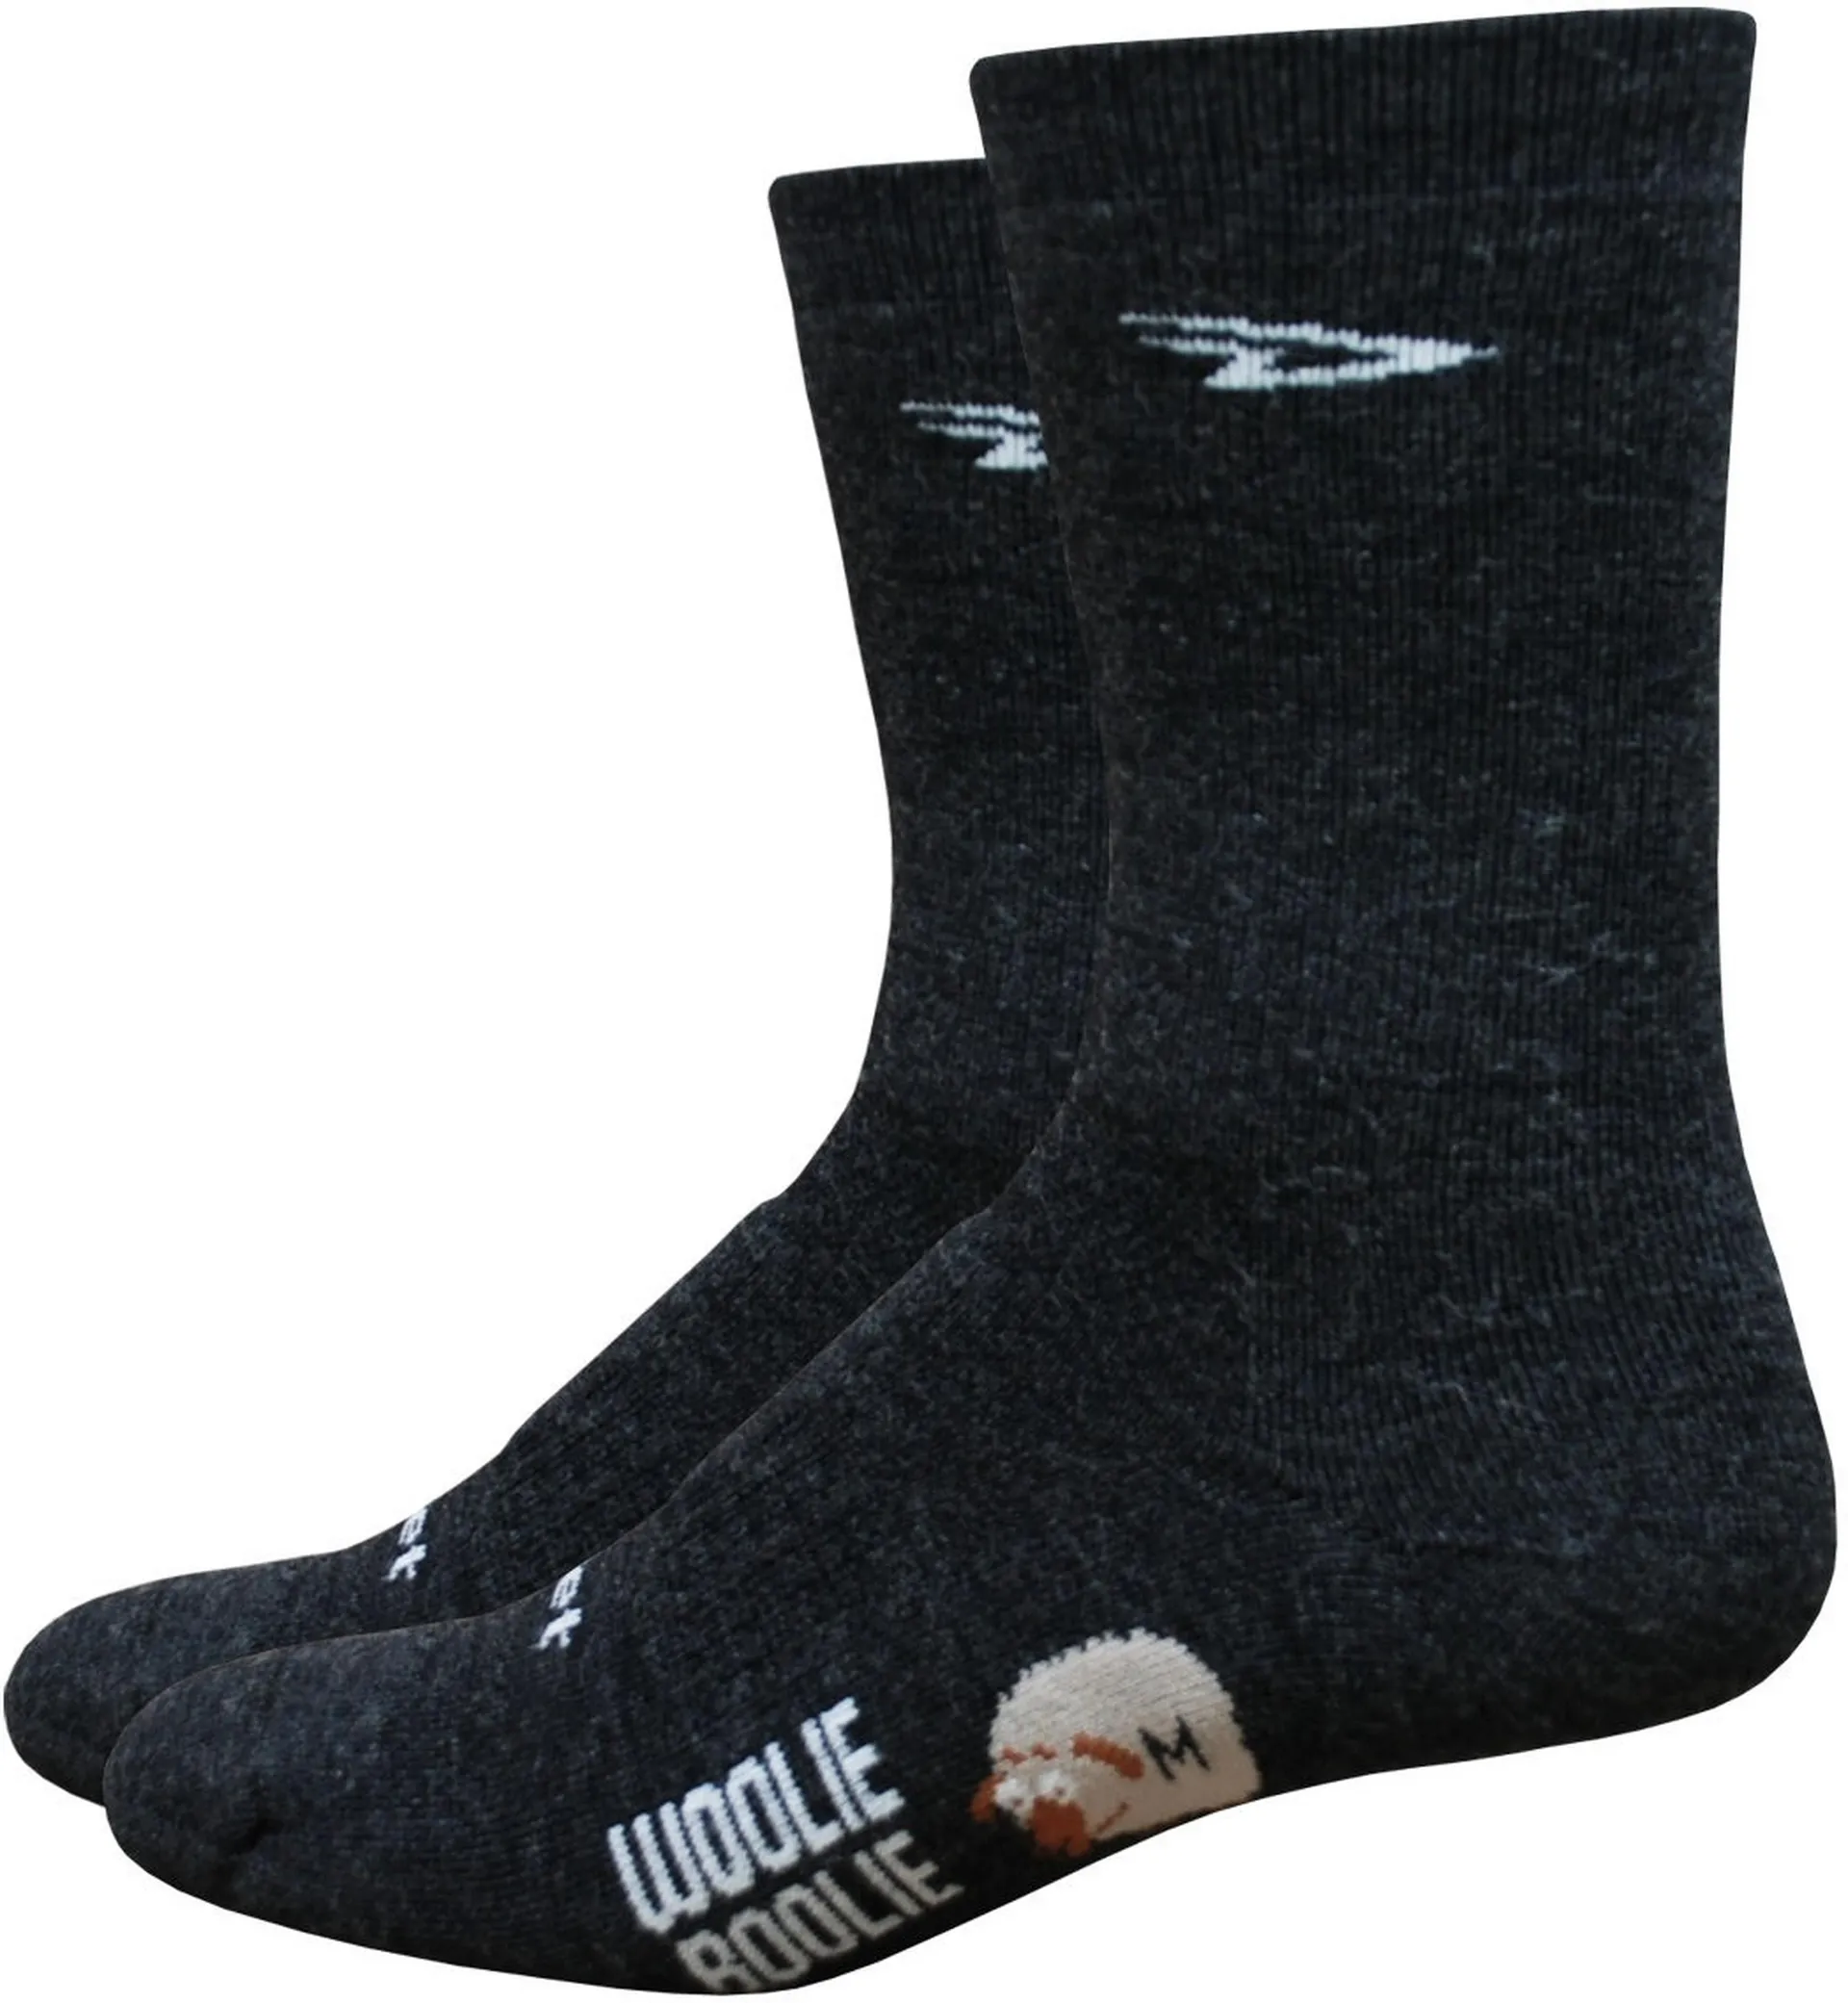 Defeet Woolie Boolie 4" Cuff Socks